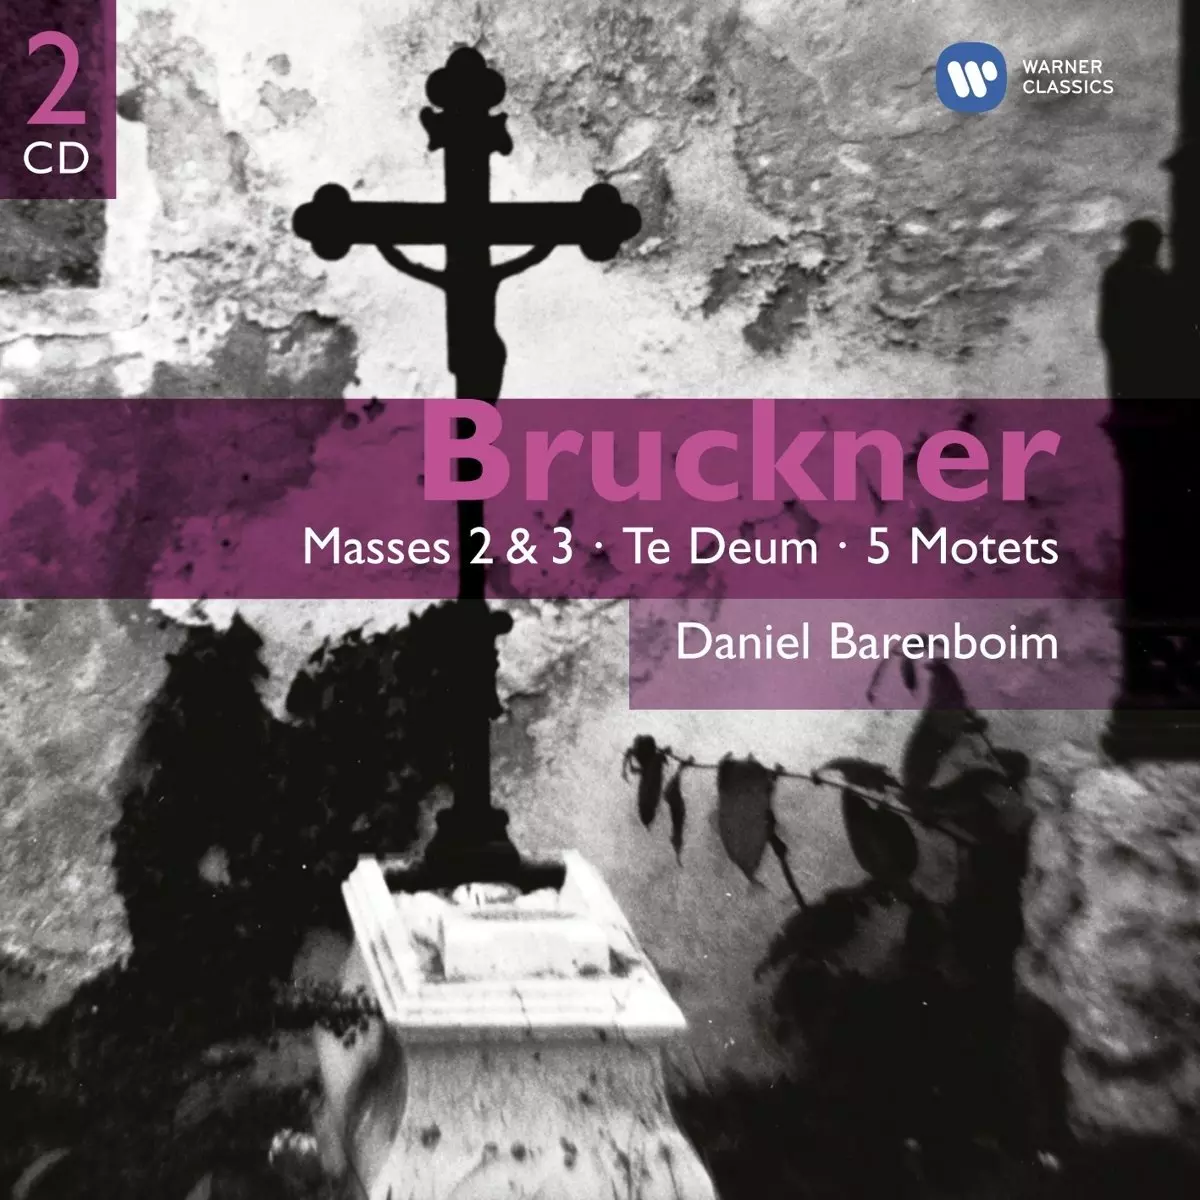 Bruckner: Masses 2 & 3 - Te Deum - 5 Motets